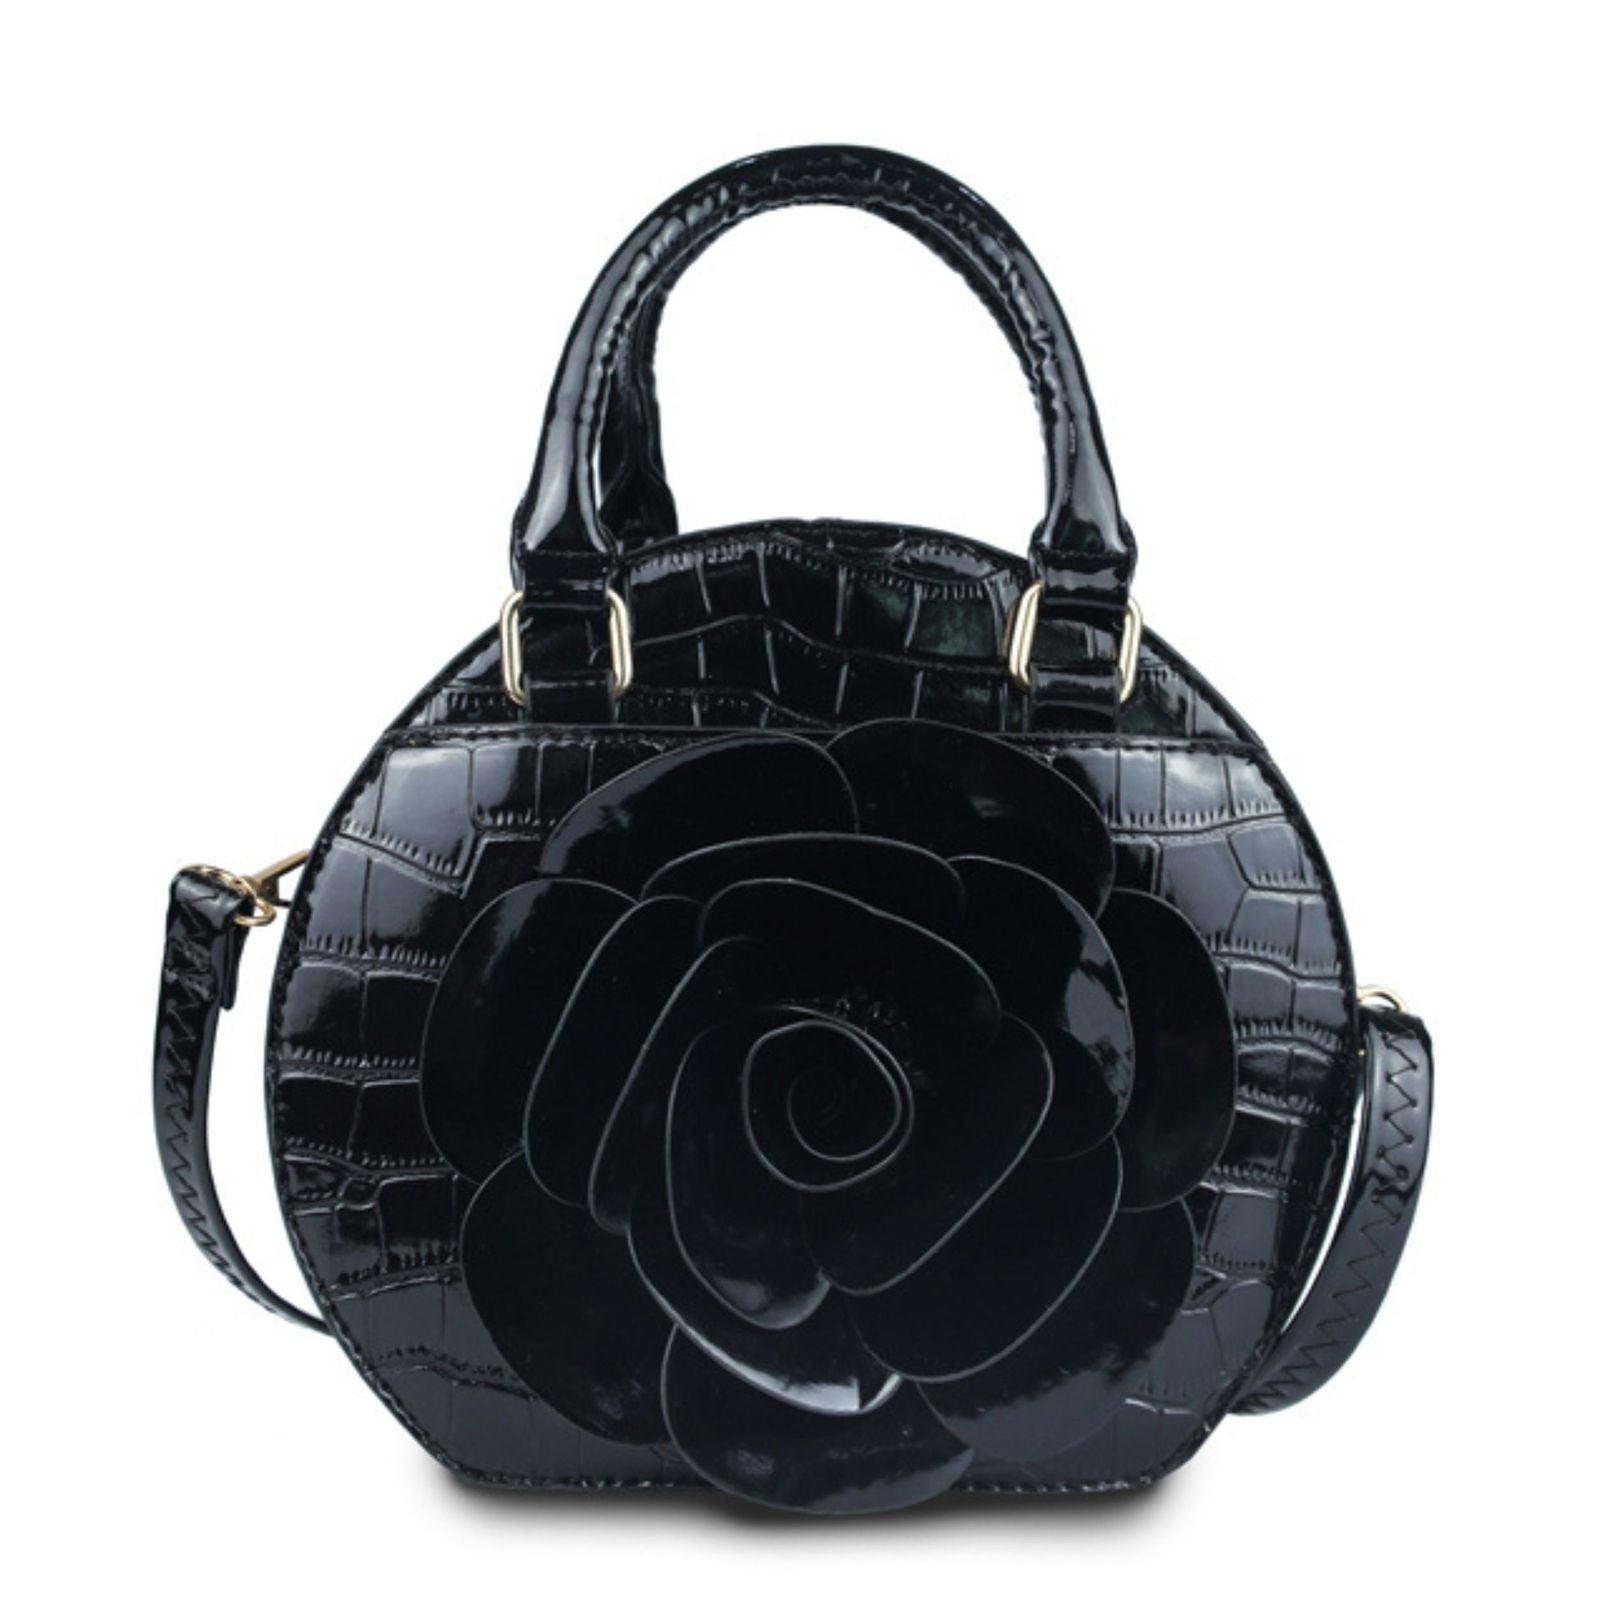 Stylish Black Dimensional Flower Handbag with Top Handles